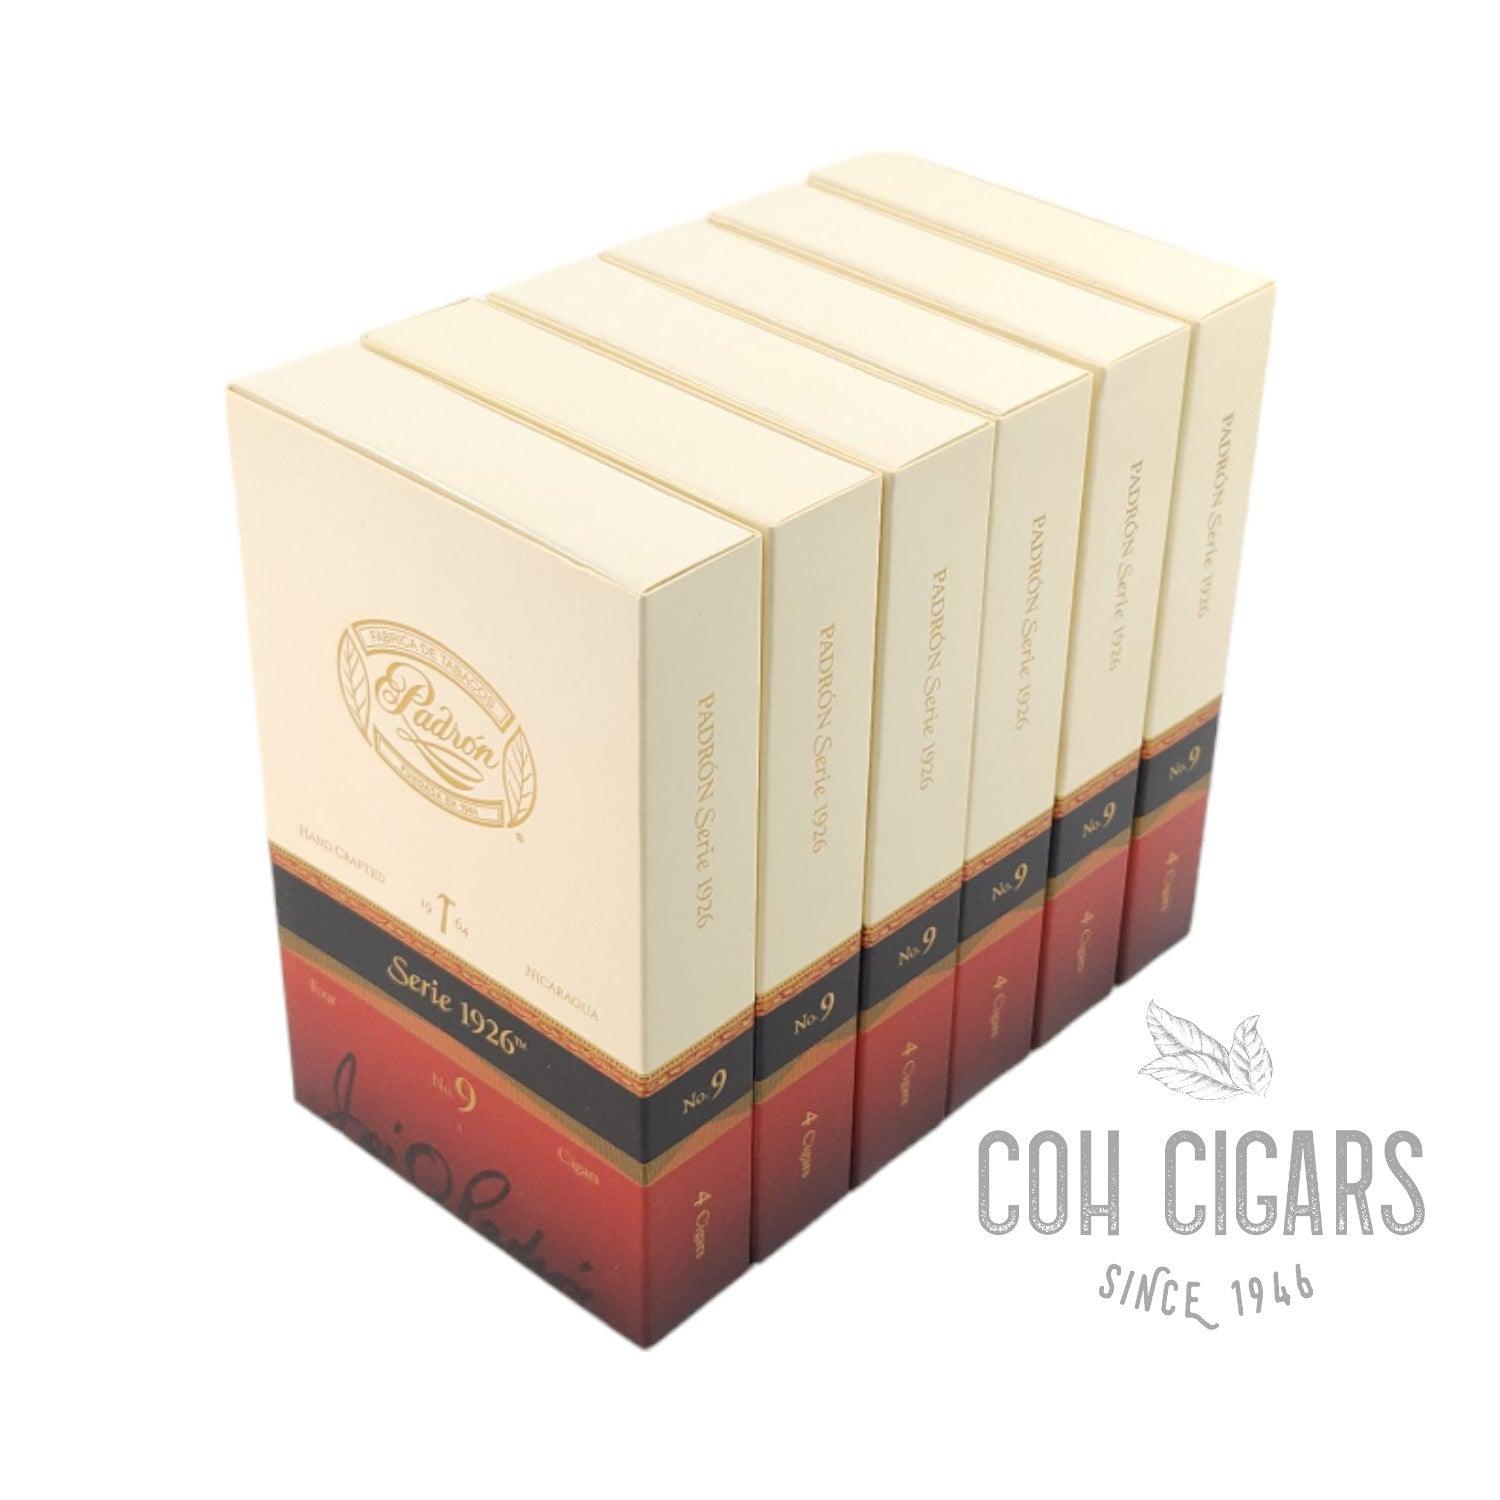 Padron Cigar | 1926 Serie No.9 Maduro | Box 24 - HK CohCigars